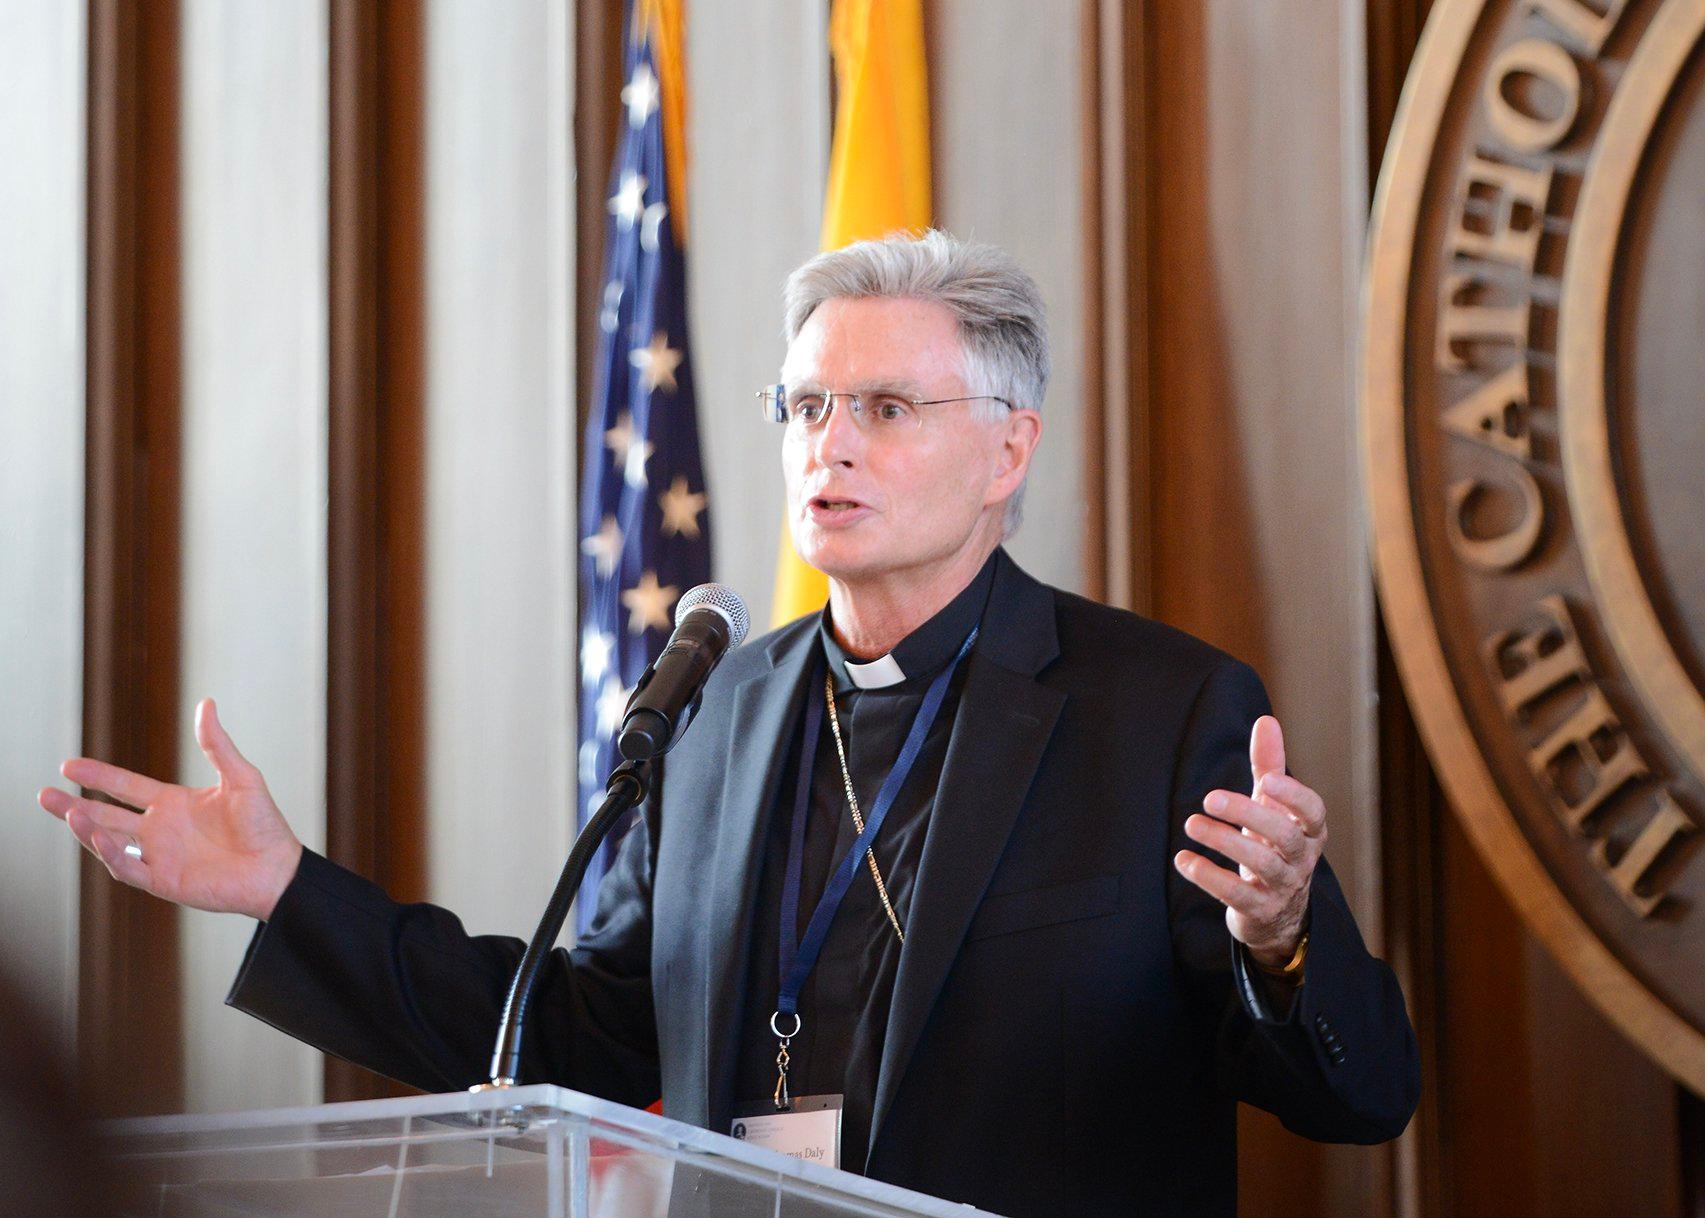 On gender policies, bishop says schools must defend Catholic identity